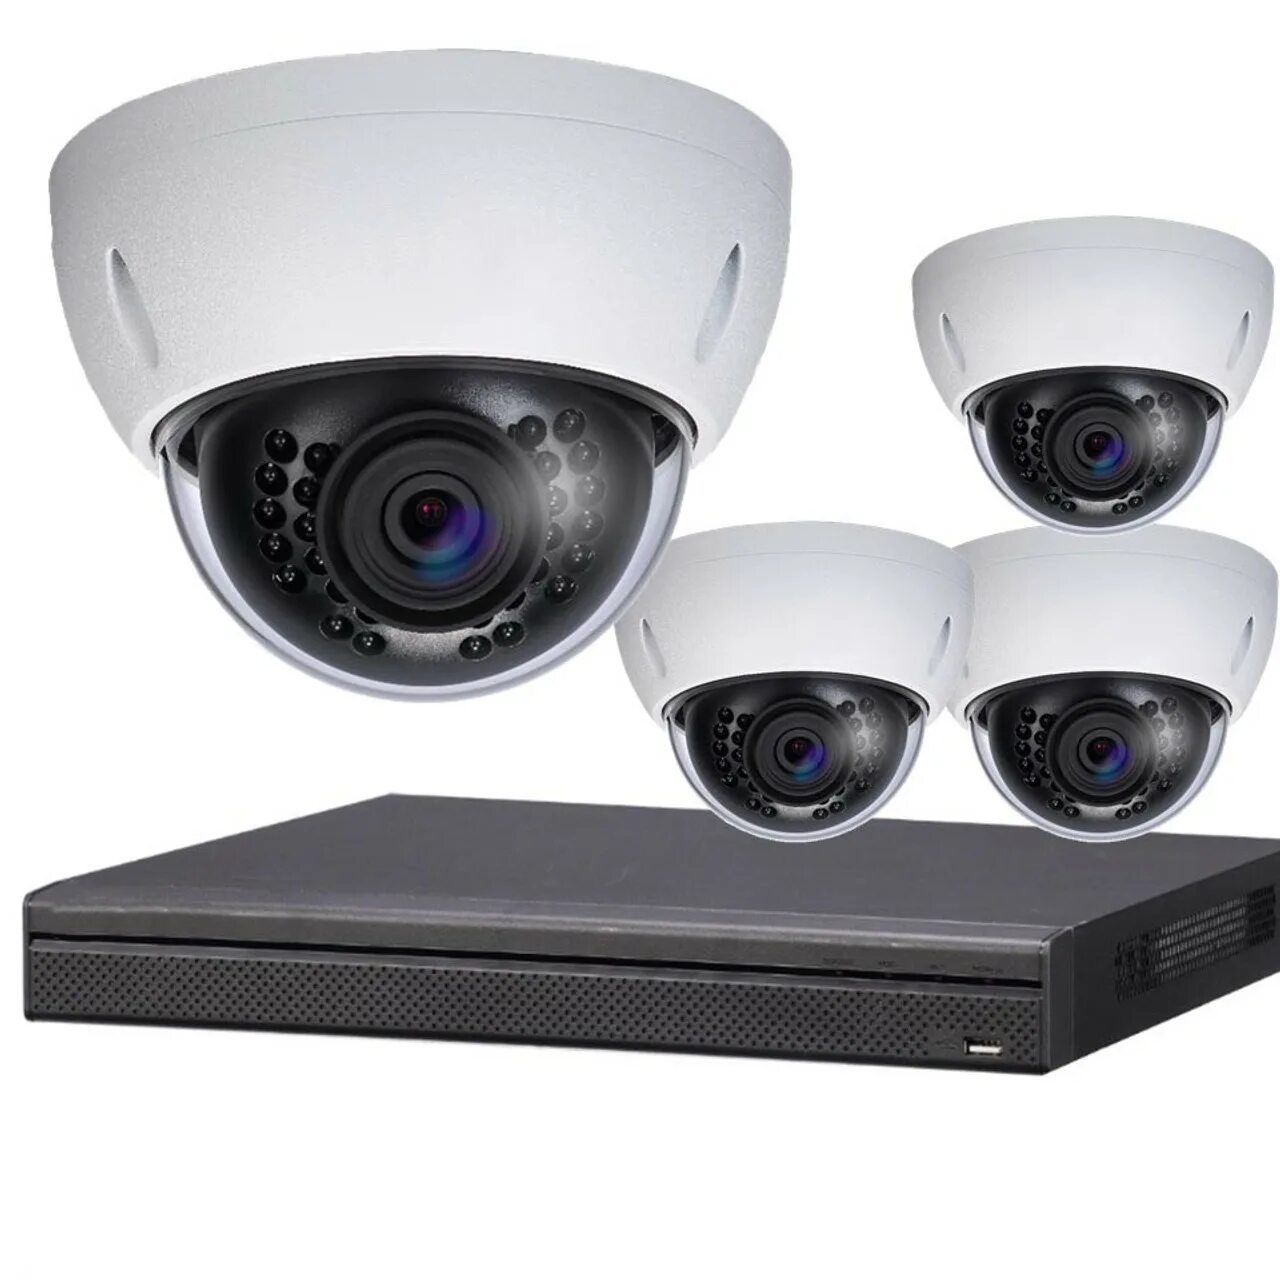 Цветная камера. Камера CCTV ACECOP ACV 200s. Камера видеонаблюдения Mike Store PTZ ms4k. Pelco камеры видеонаблюдения производитель.